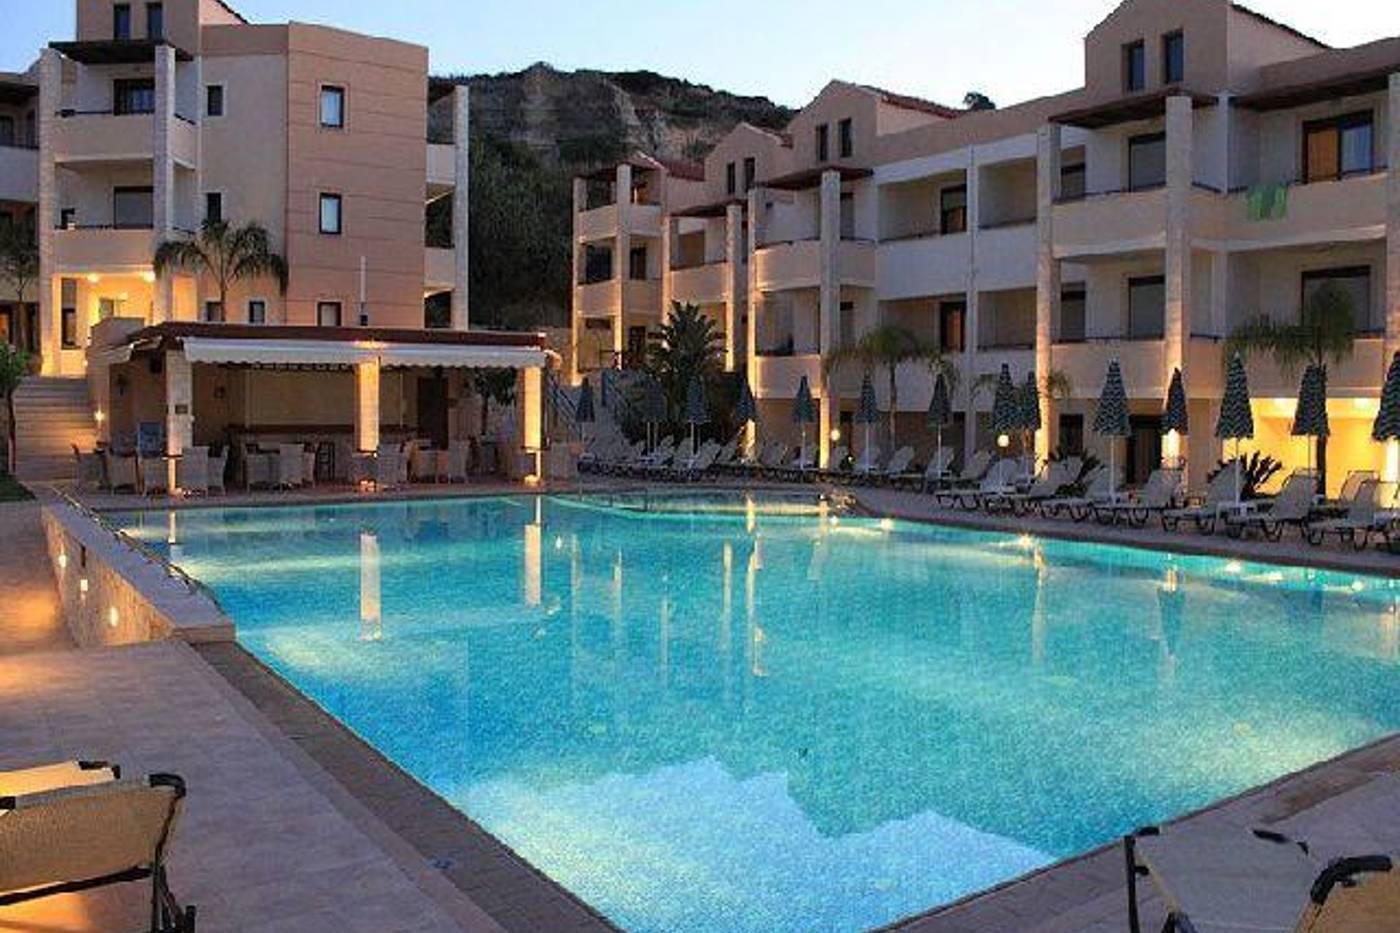 Creta Palm Hotel & Apartments